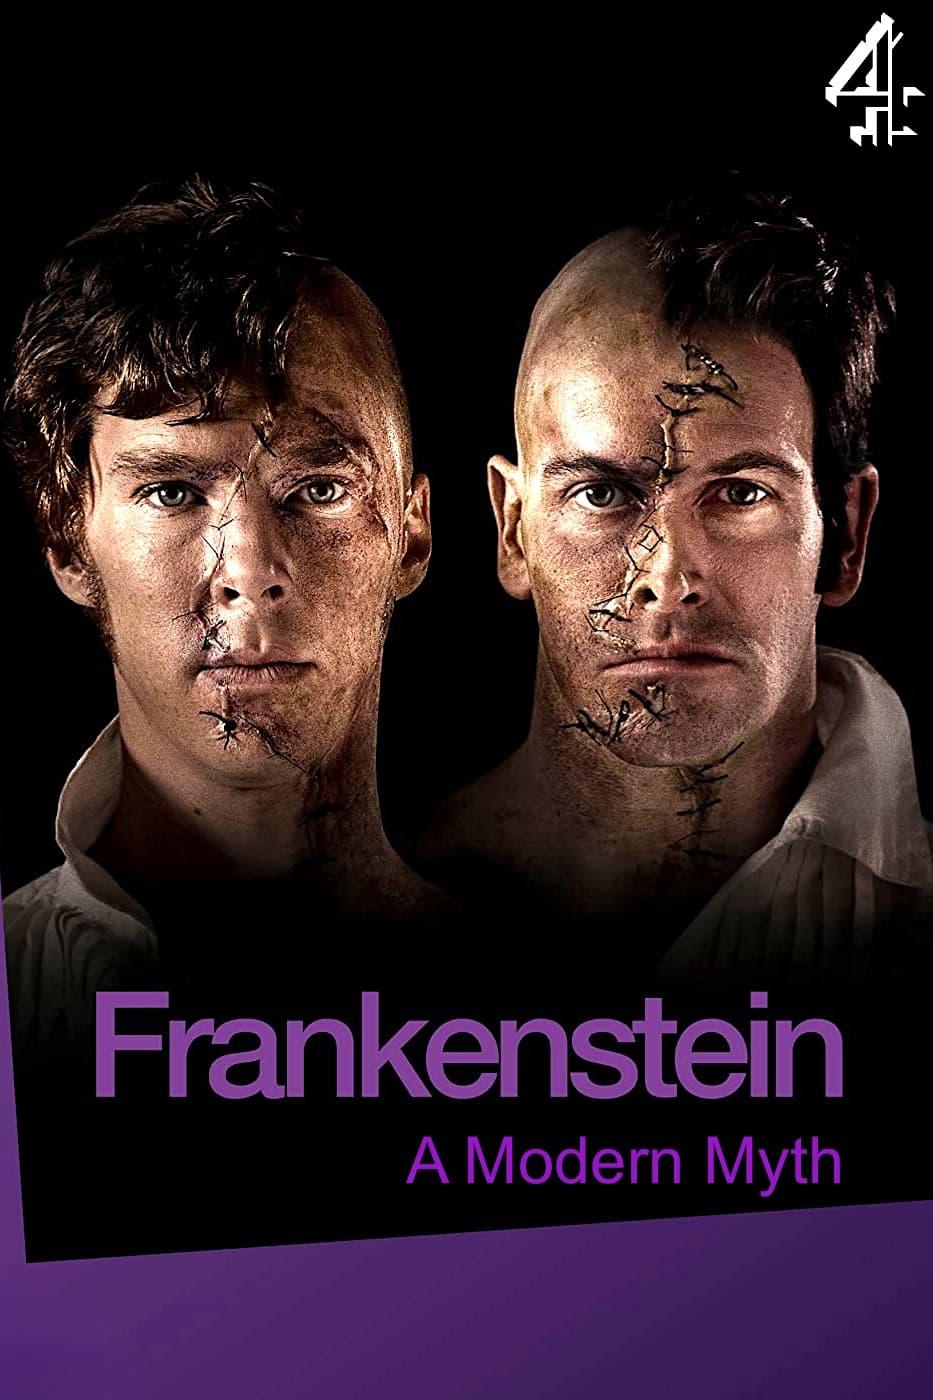 Frankenstein: A Modern Myth poster